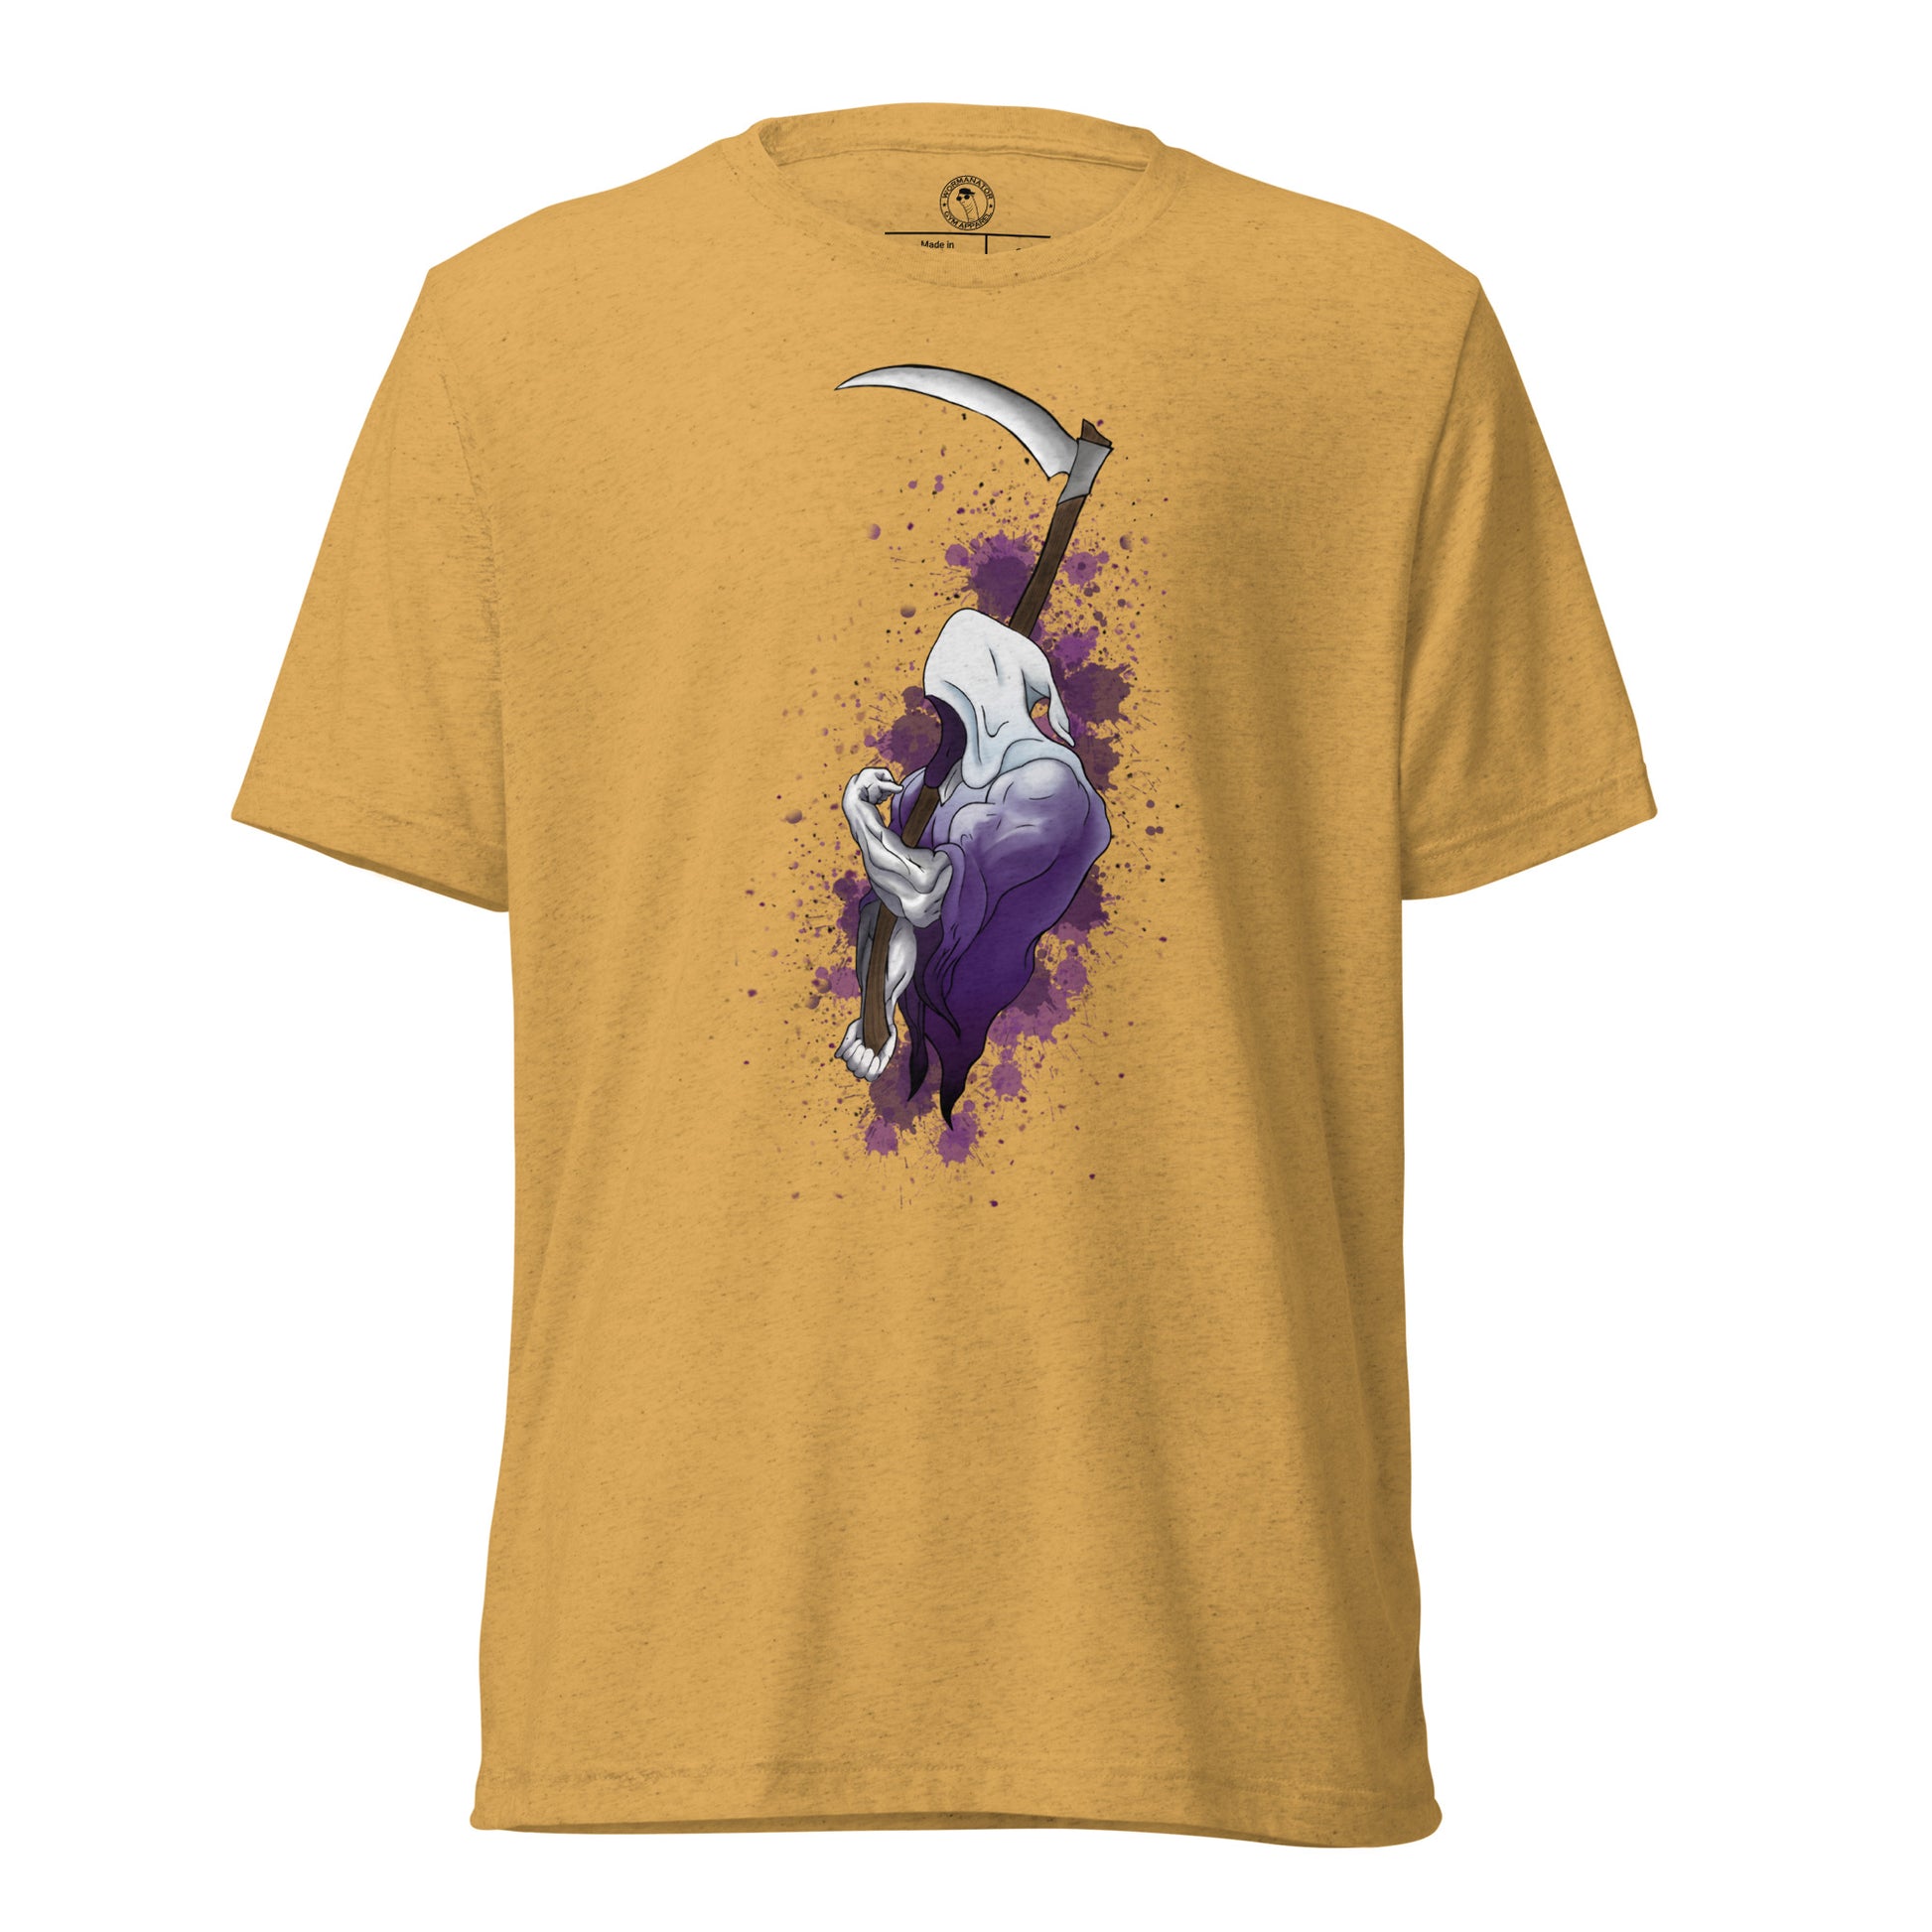 Grip Reaper Shirt in Mustard Triblend